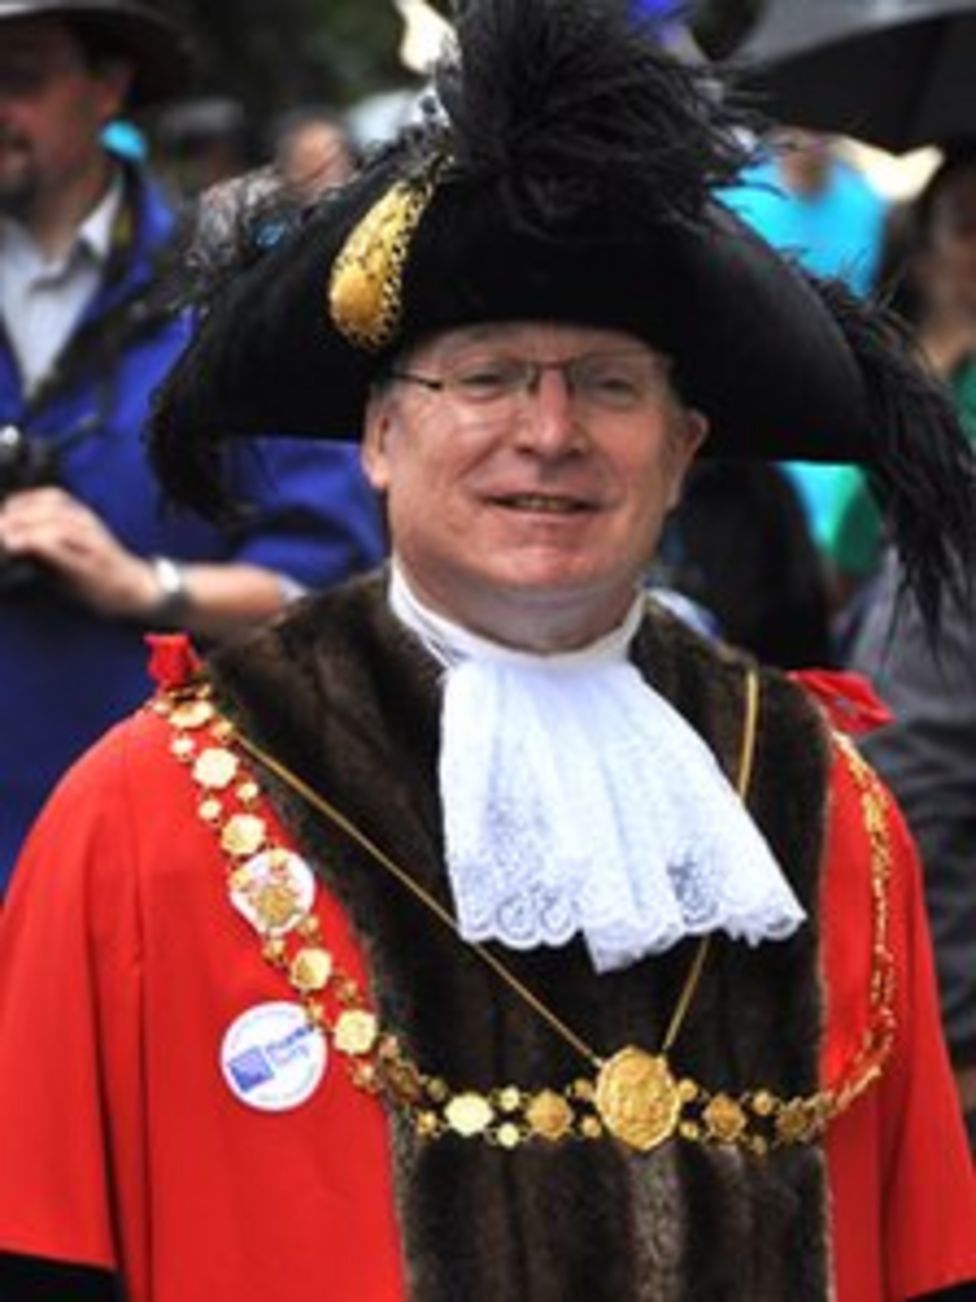 Bristol Lord Mayor Peter Main has cancer treatment